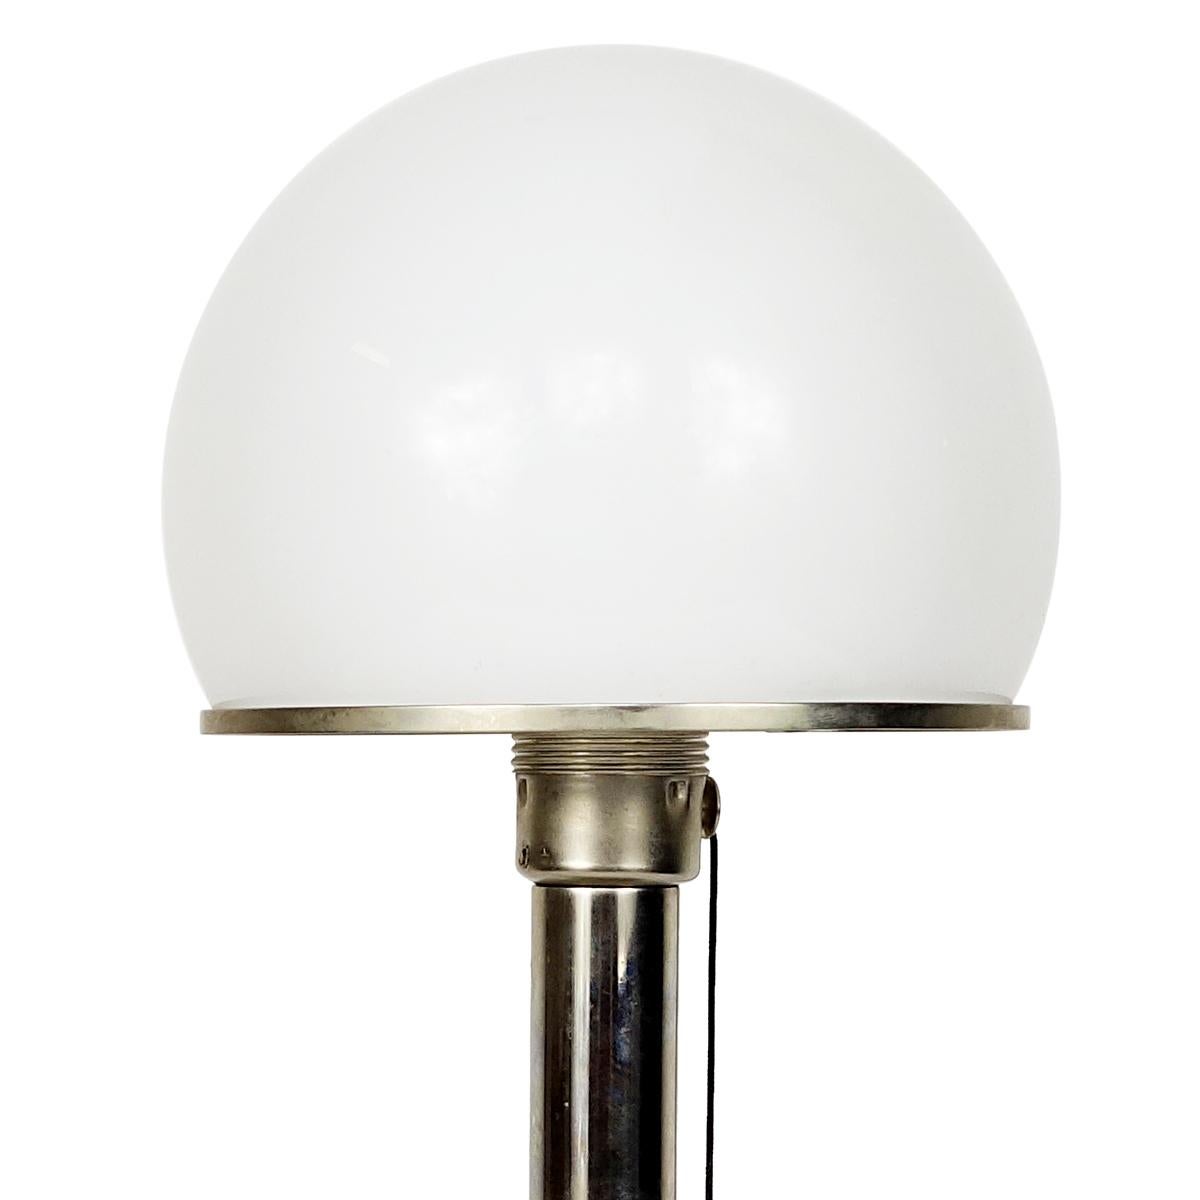 20th Century Bauhaus Wa 24 Table Lamp Designed by Wilhelm Wagenfeld for Tecnolumen